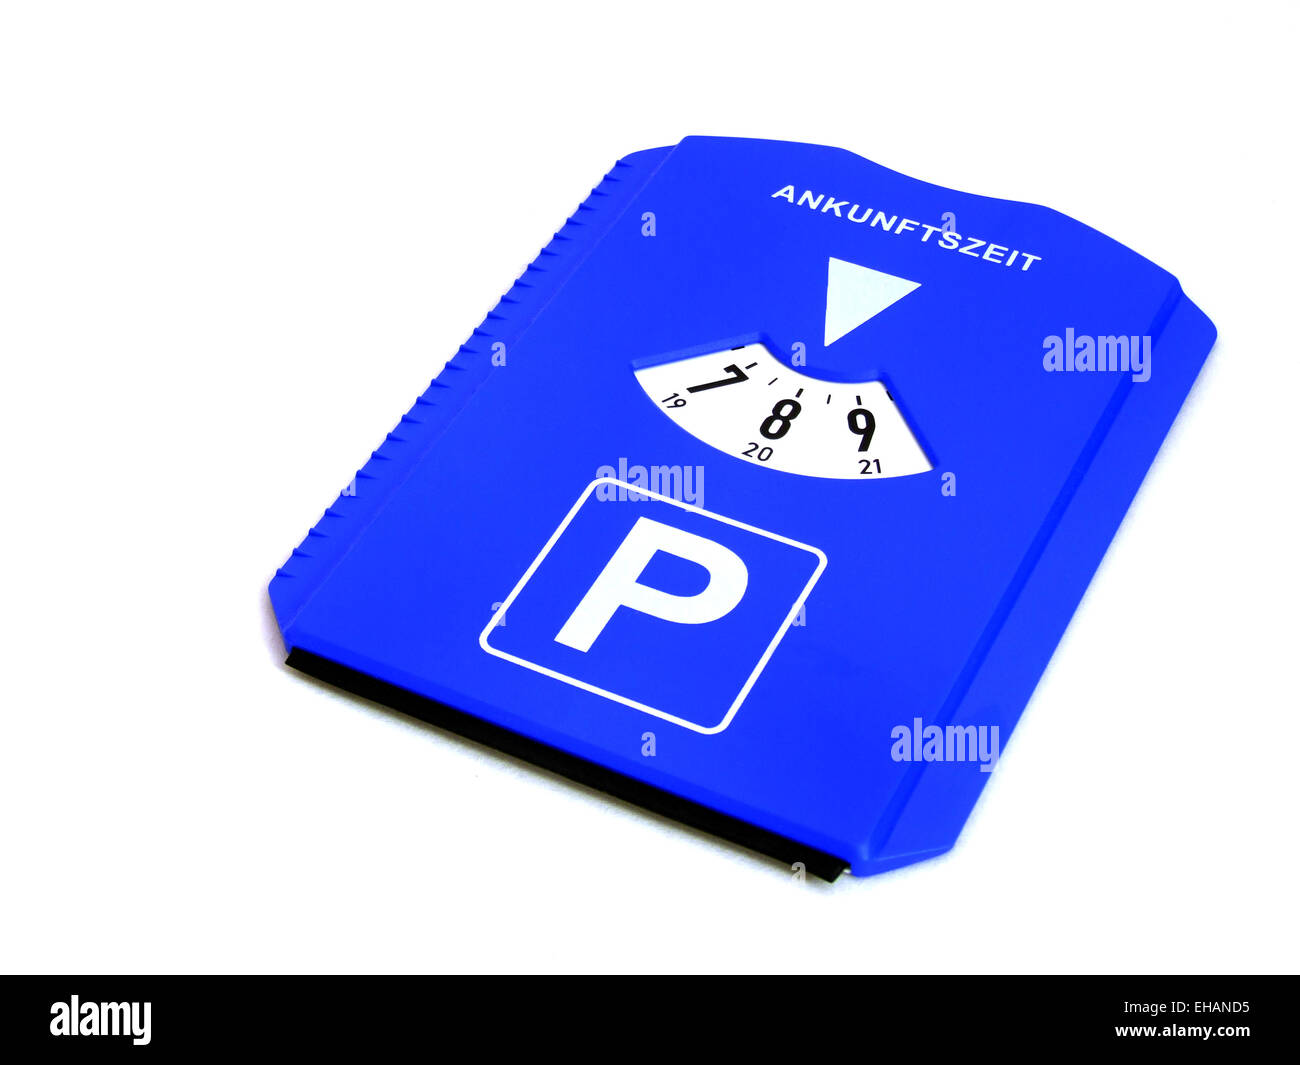 Parkscheibe / parking disk Stock Photo - Alamy